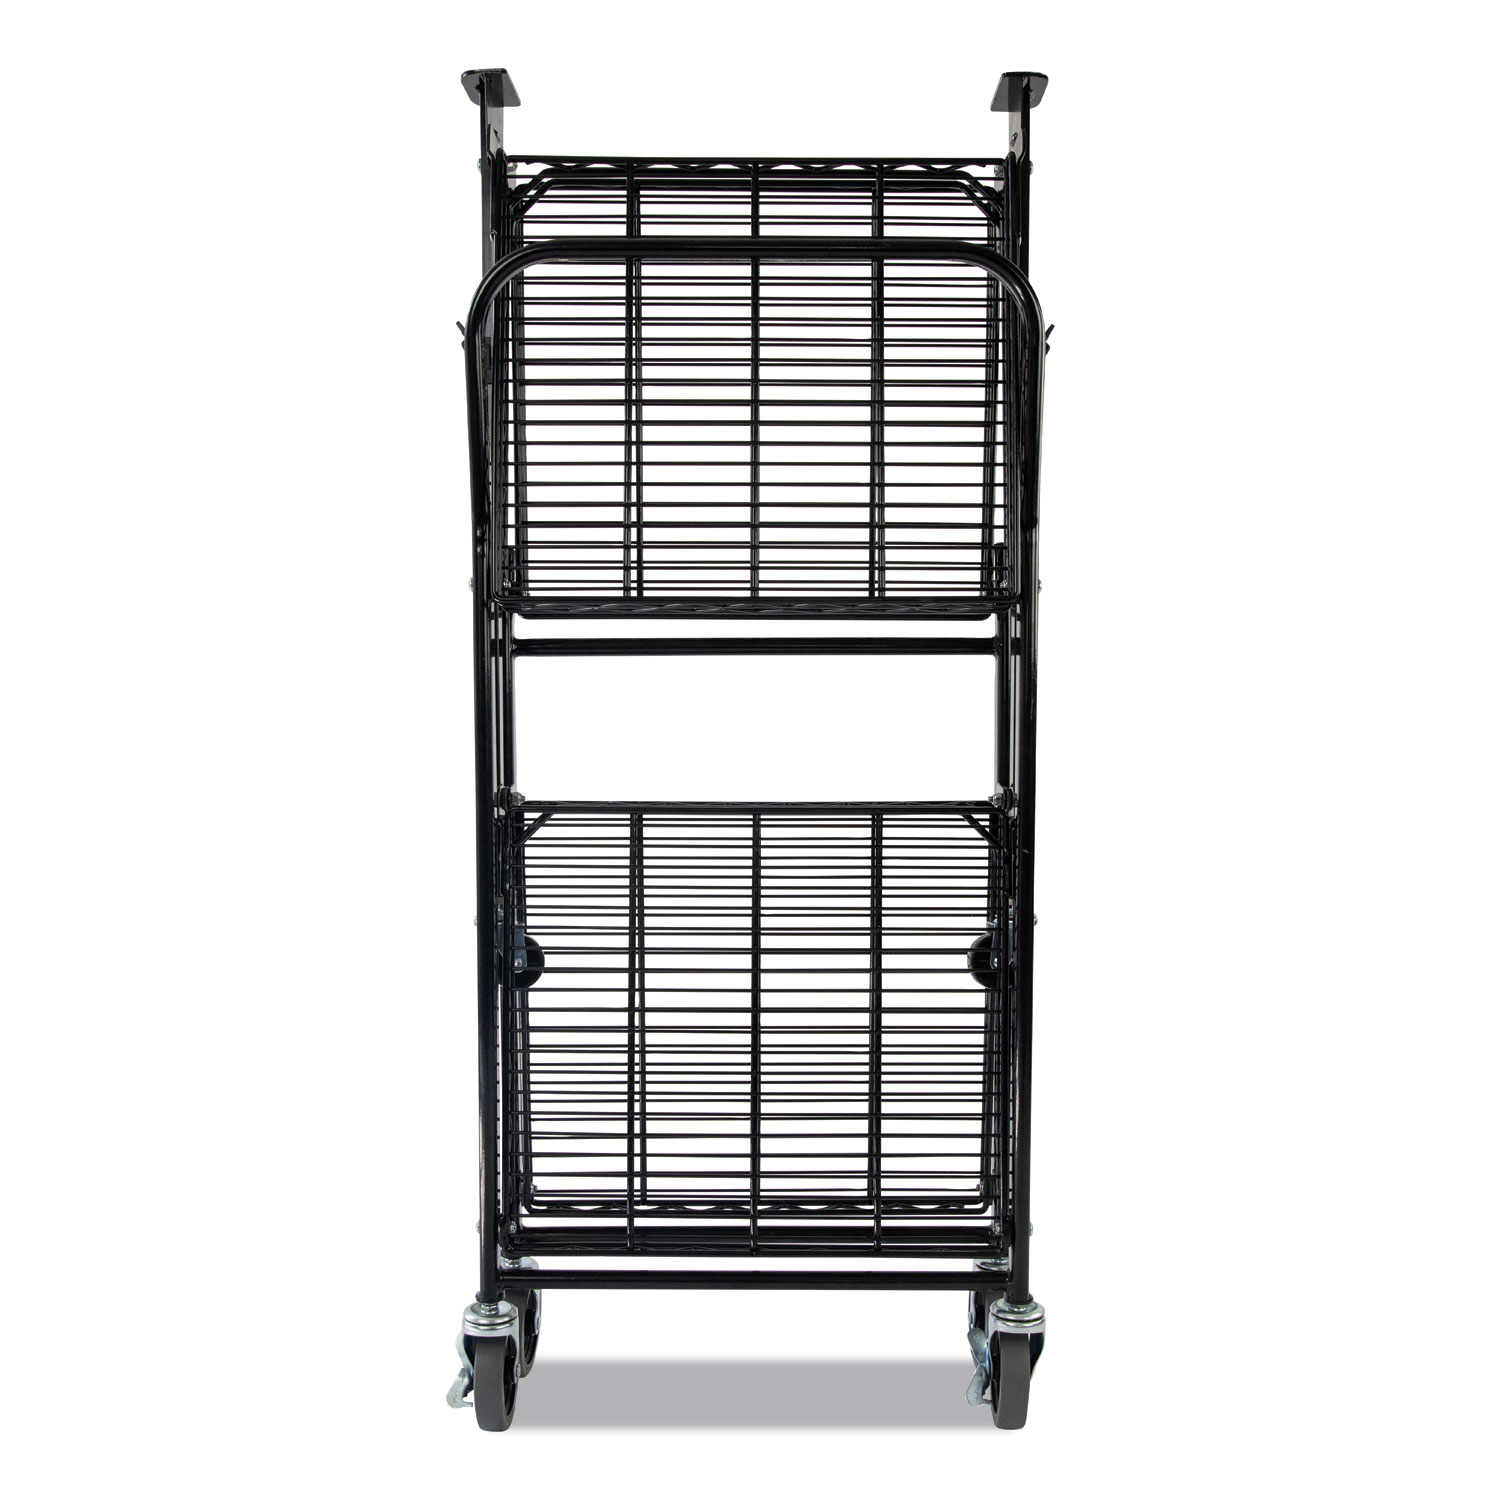 Image of Stowaway Folding Carts, 2 Shelves, 29.63w x 37.25d x 18h, Black, 250 lb Capacity